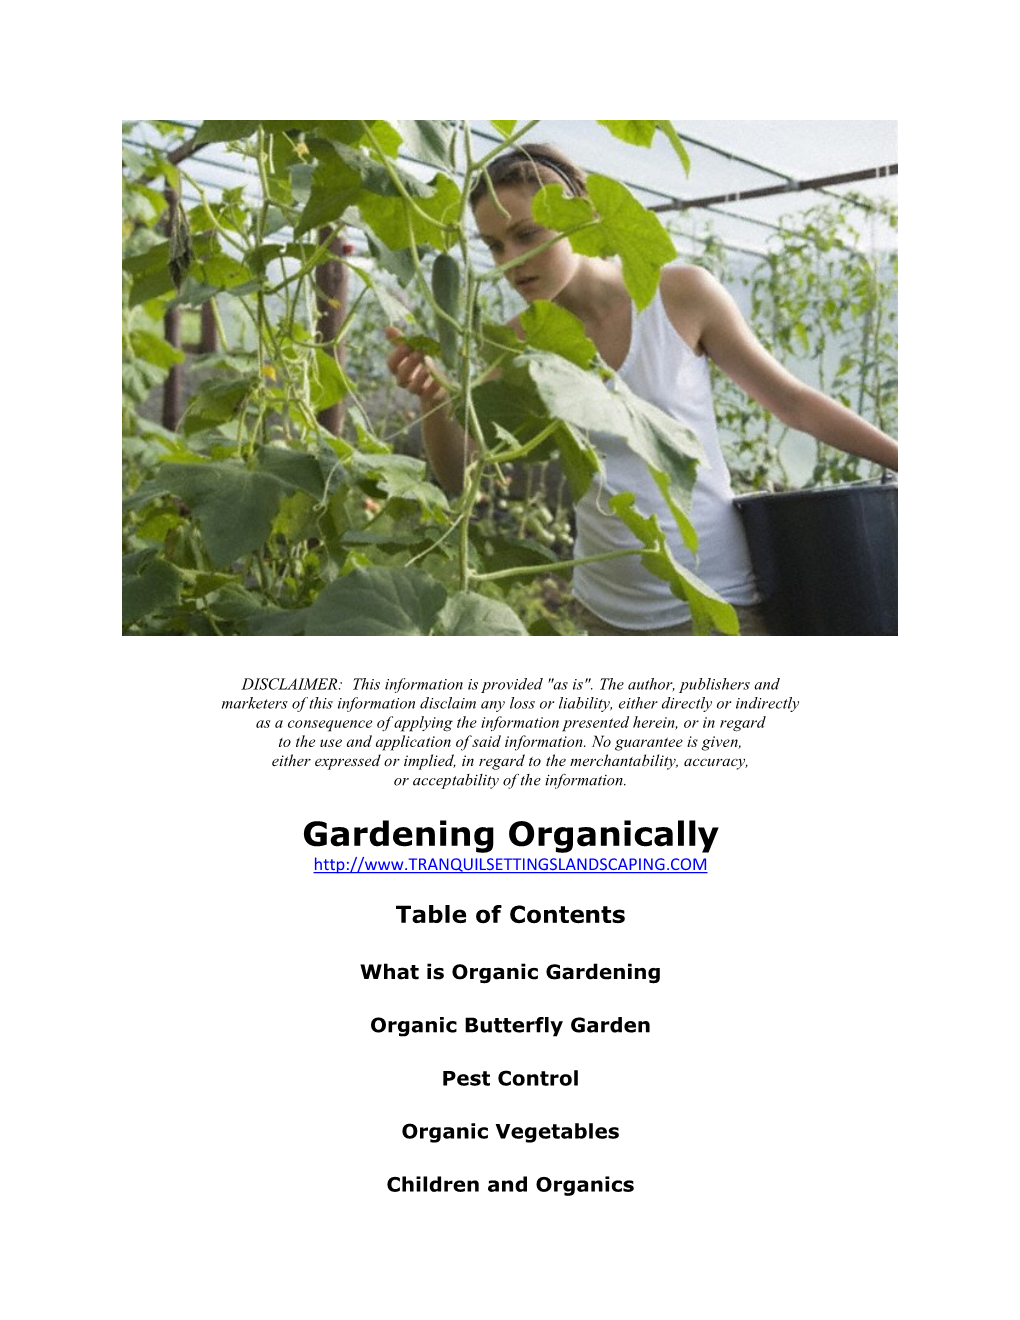 Gardening Organically